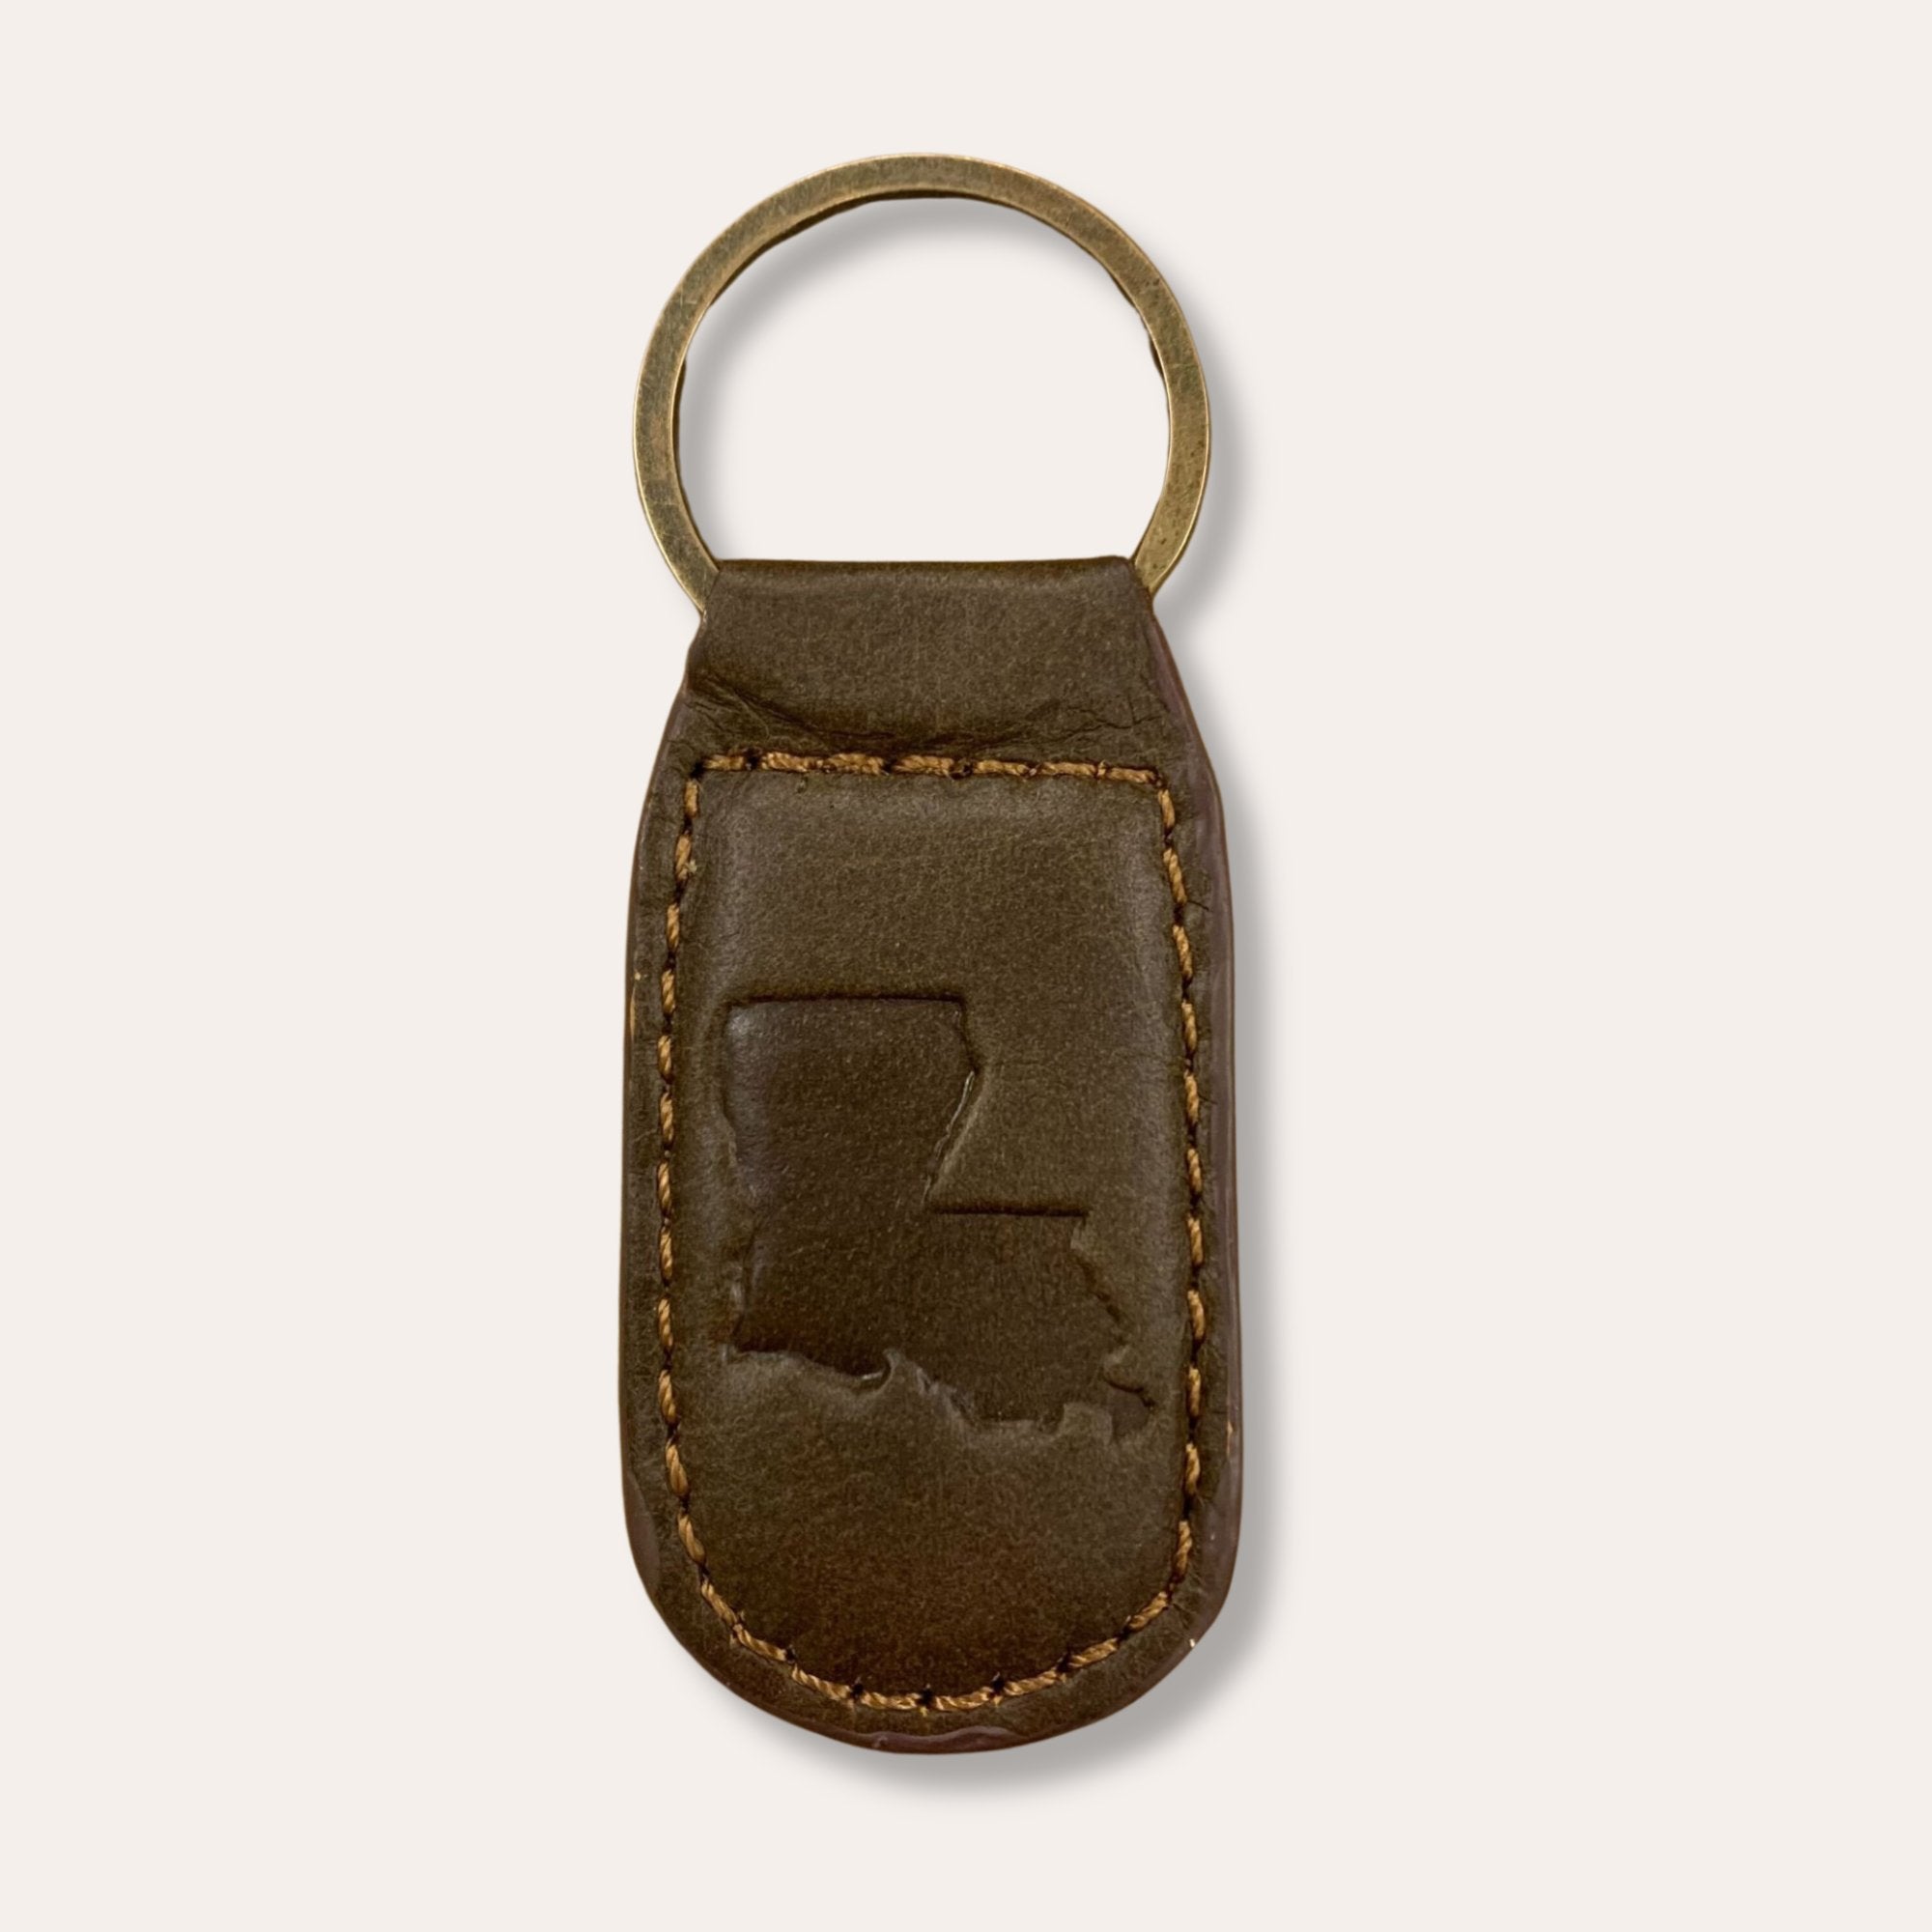 Dirty Coast Leather Louisiana Embossed Keychain